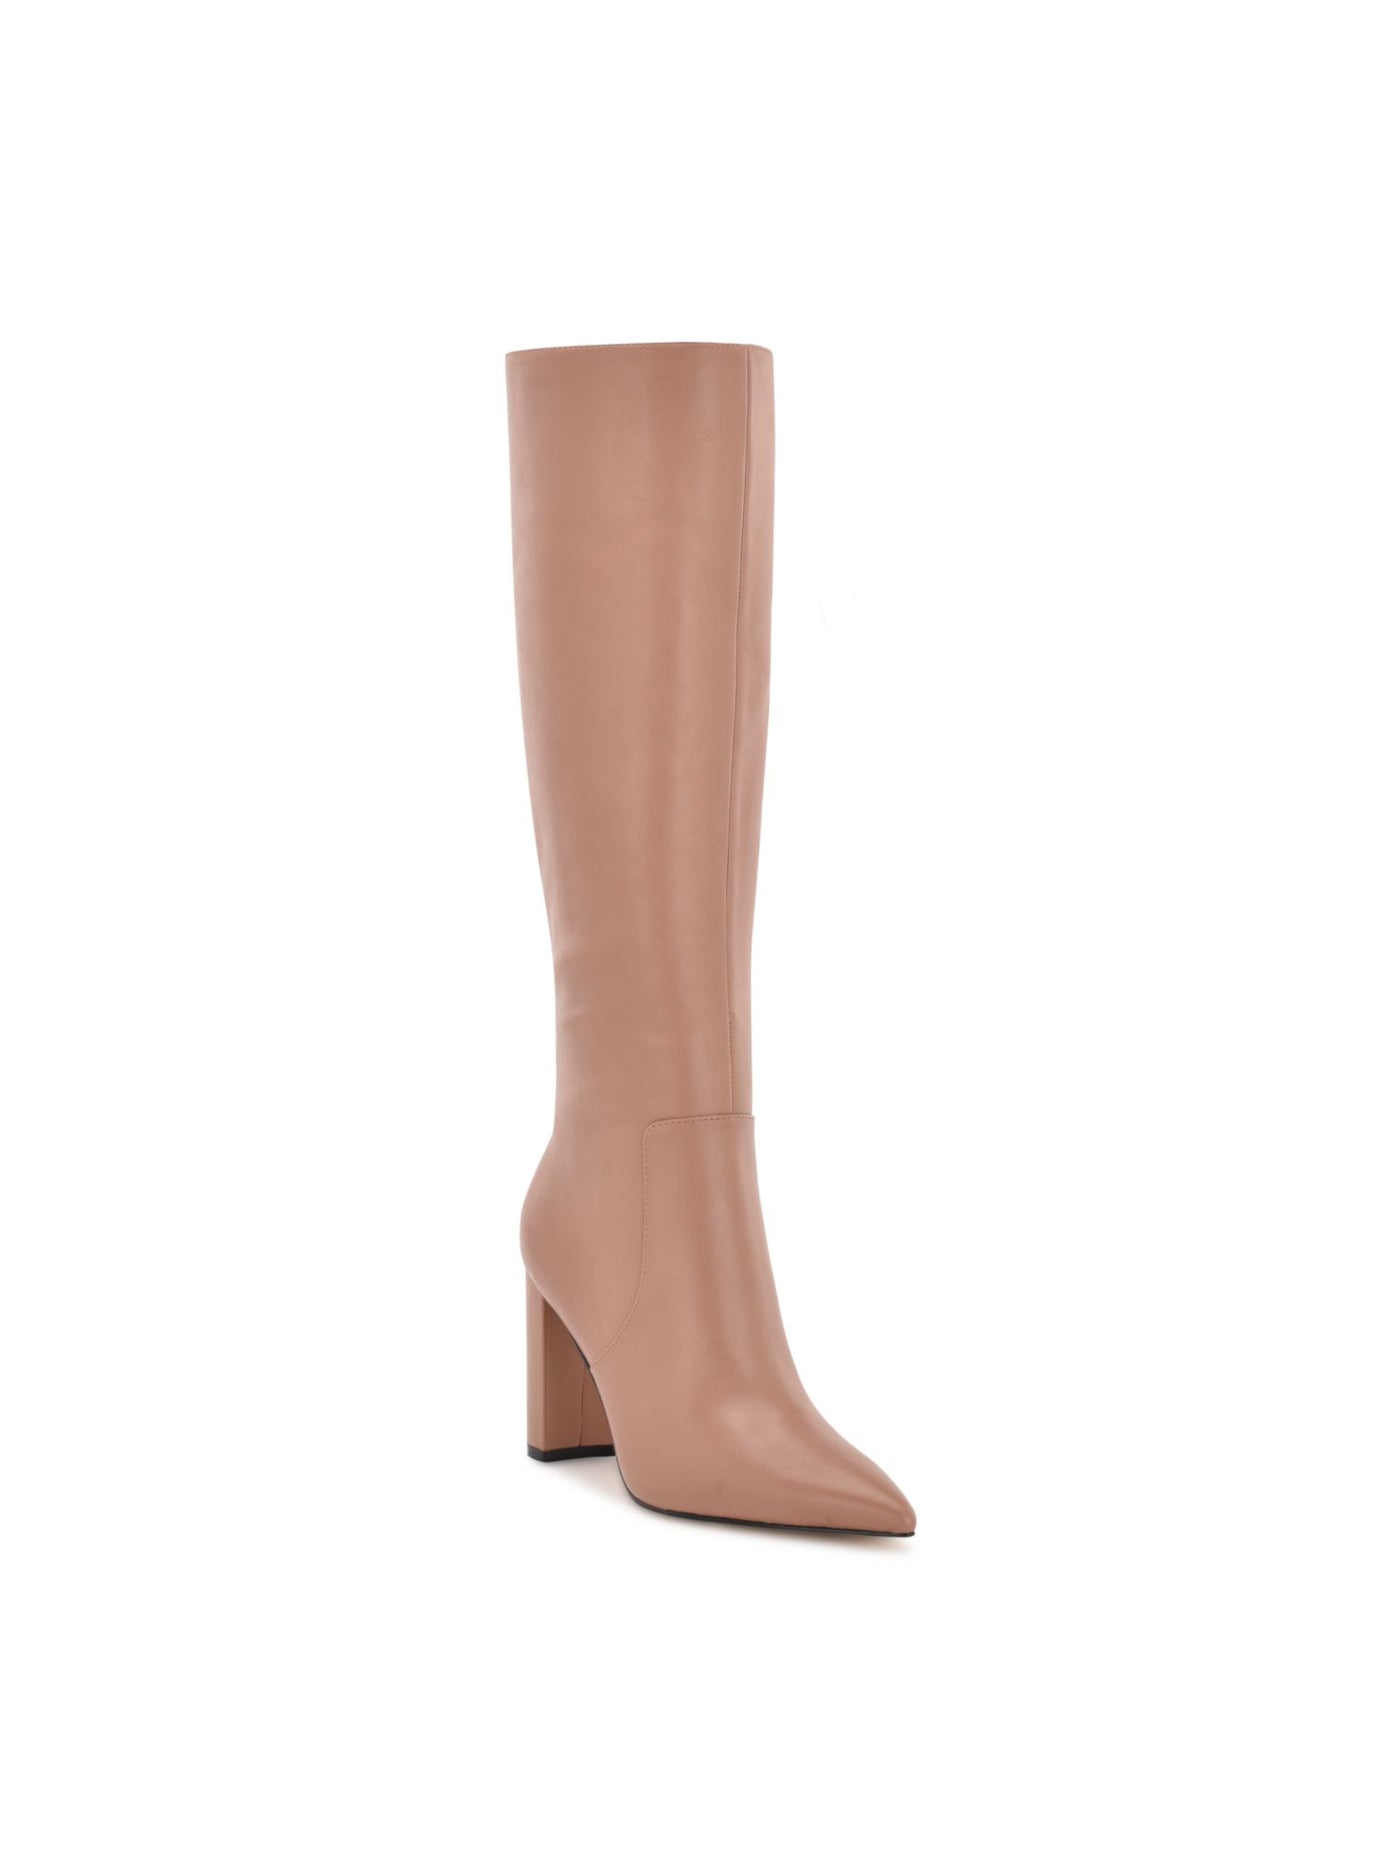 NINE WEST Womens Beige Padded Goring Danee Pointed Toe Block Heel Zip-Up Leather Dress Boots 7 M